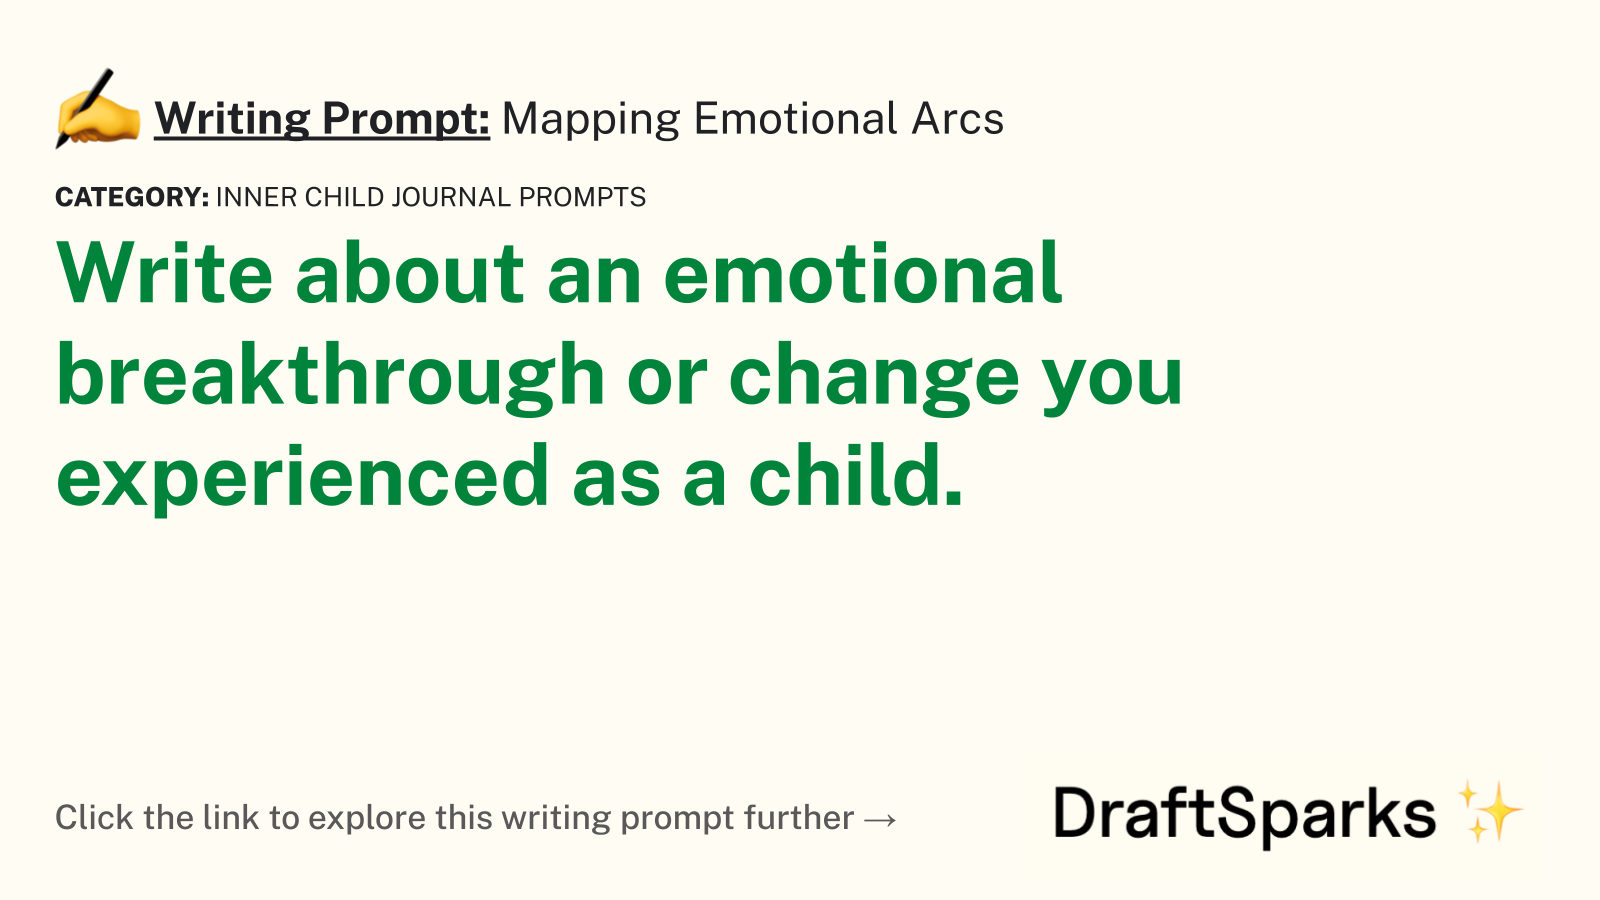 Mapping Emotional Arcs